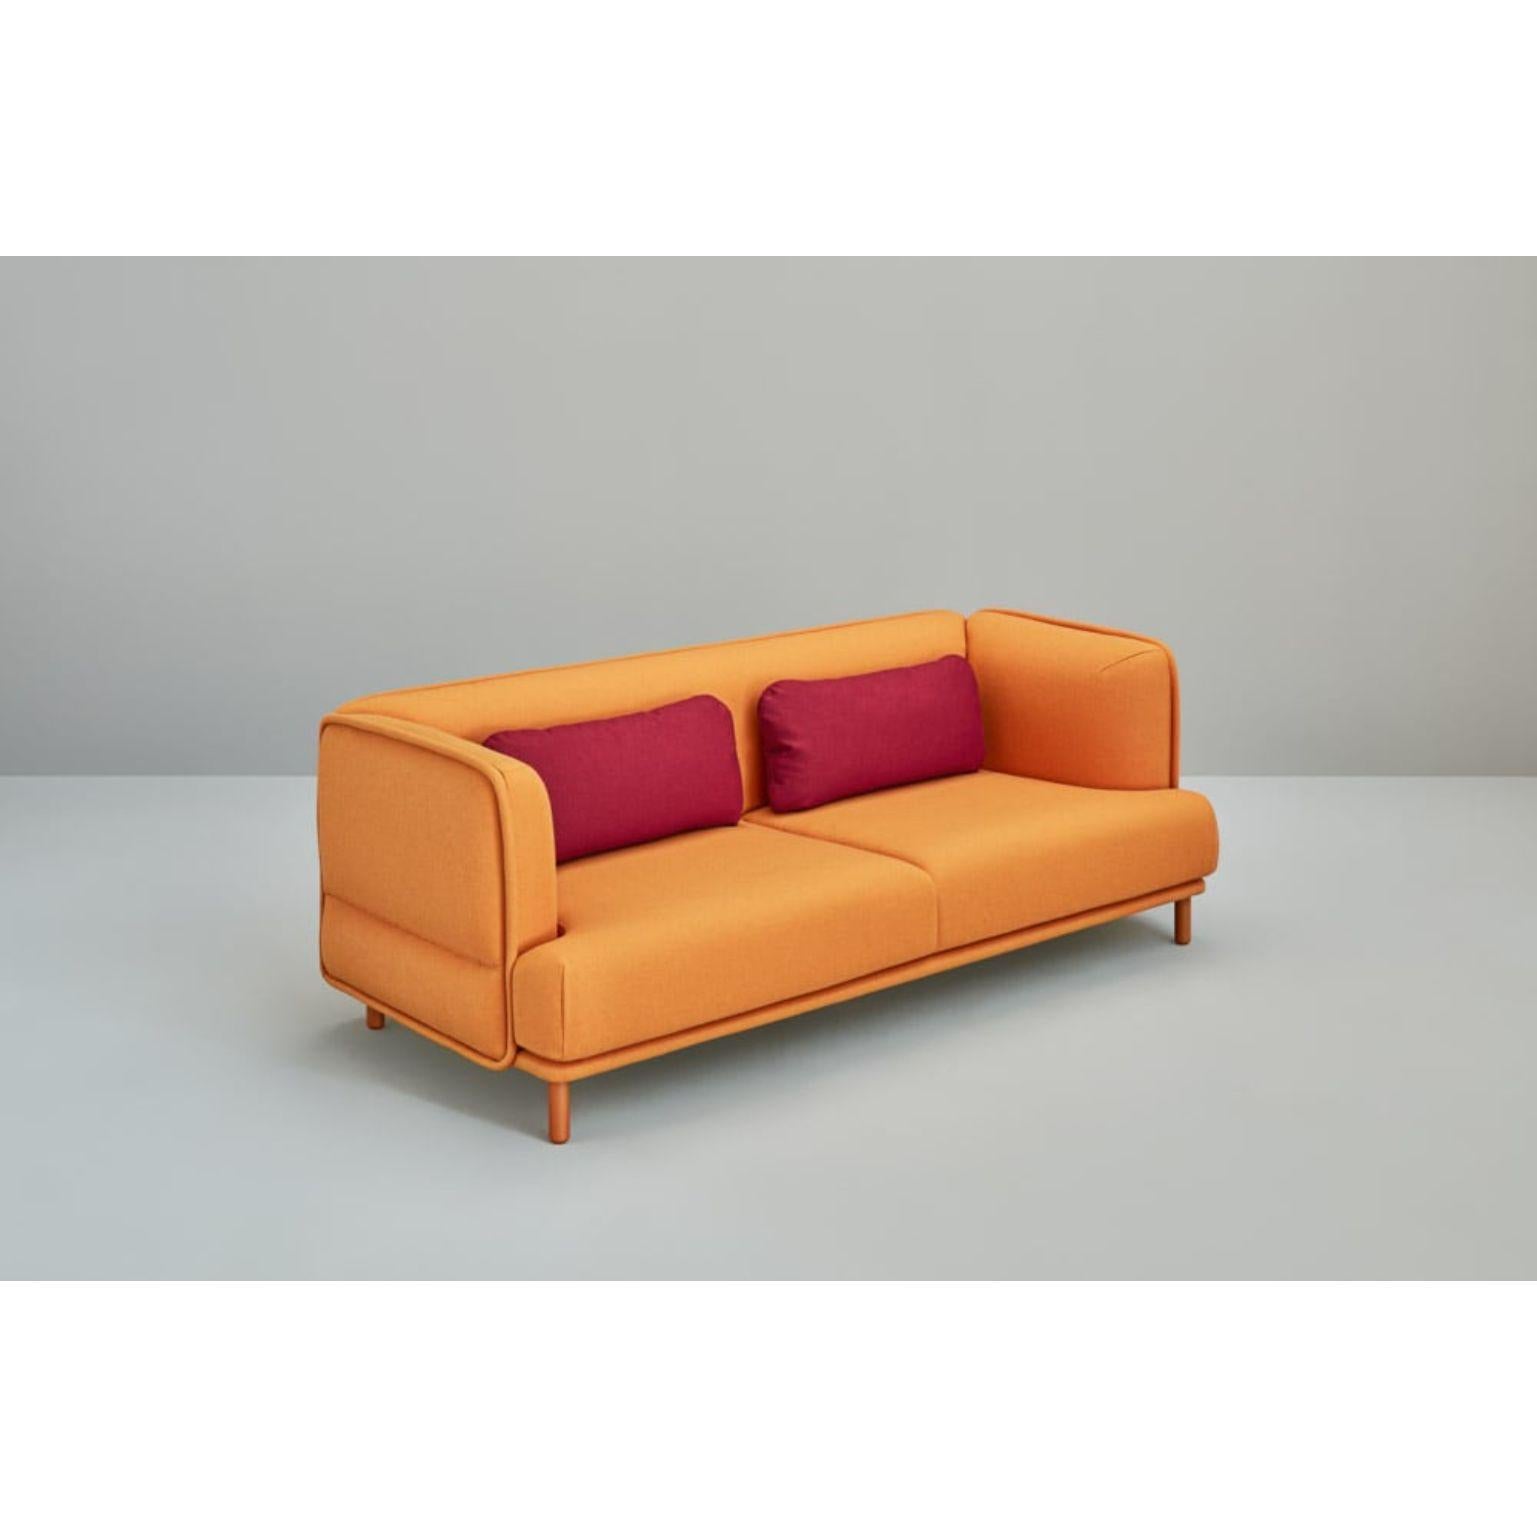 Post-Modern Hug Sofa, 2 Seaters by Cristian Reyes